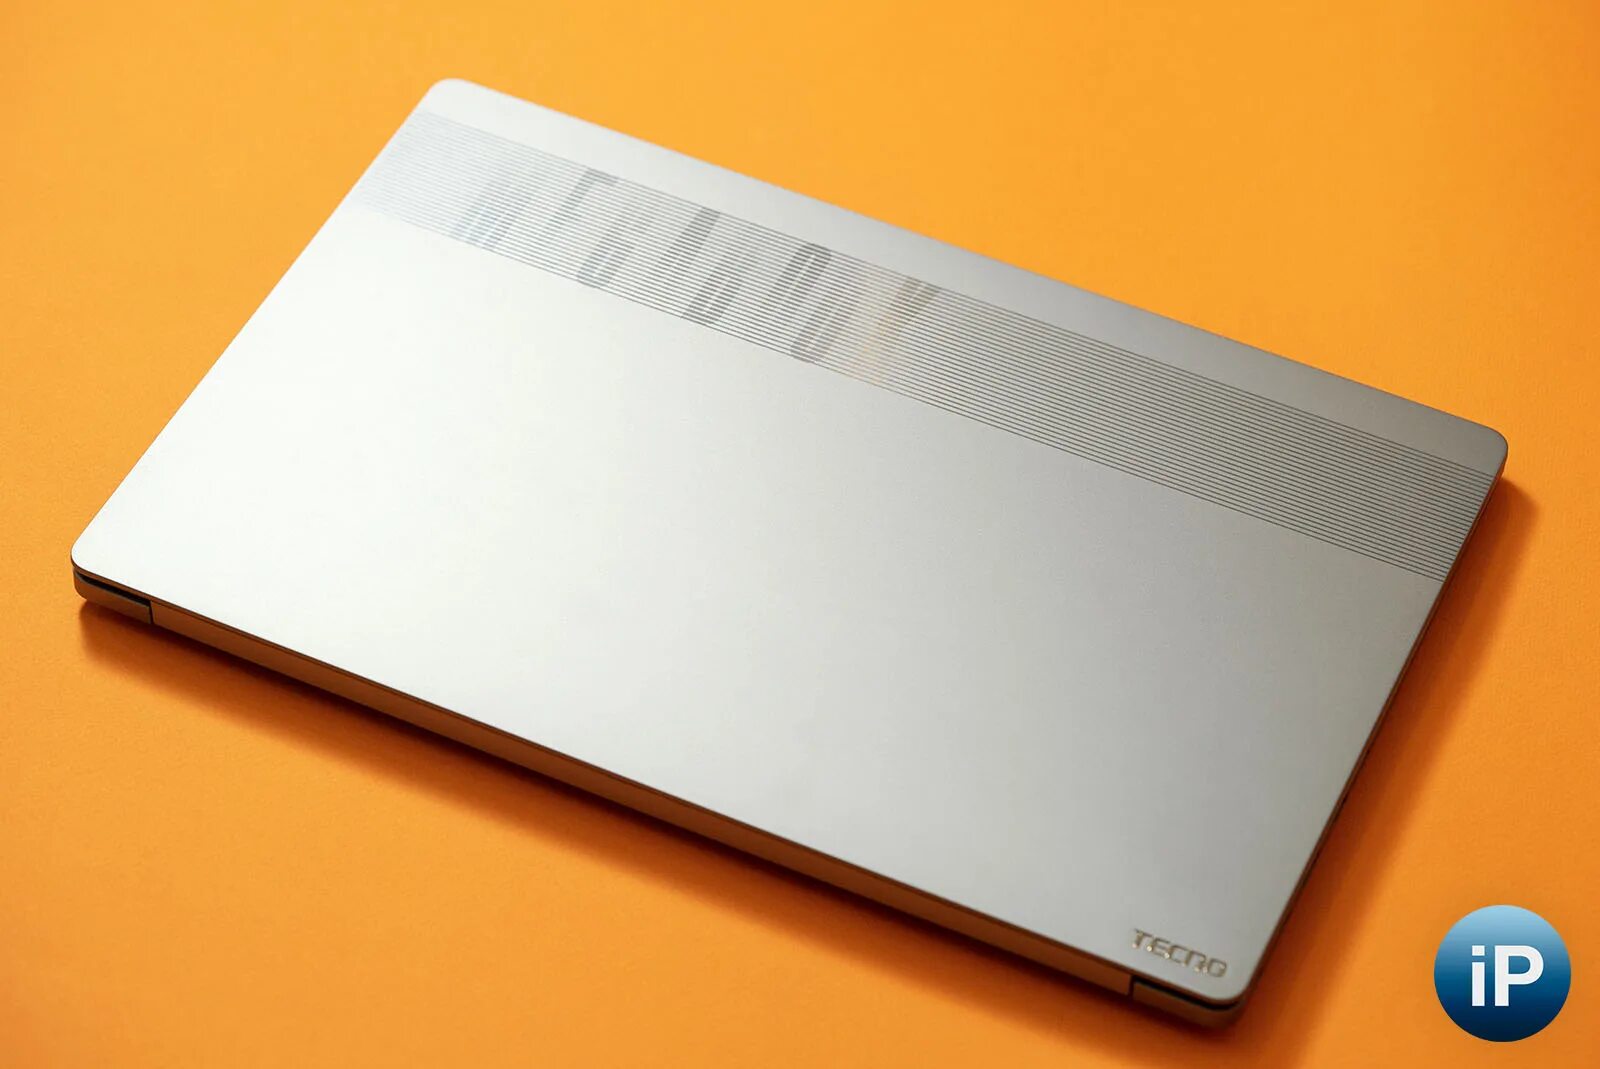 Ноутбук MEGABOOK. Techno ноутбук MEGABOOK цвета. Матрица ноутбука Techno MEGABOOK t1. Ноутбук Tecno MEGABOOK t1 синий. Tecno megabook t1 5800u